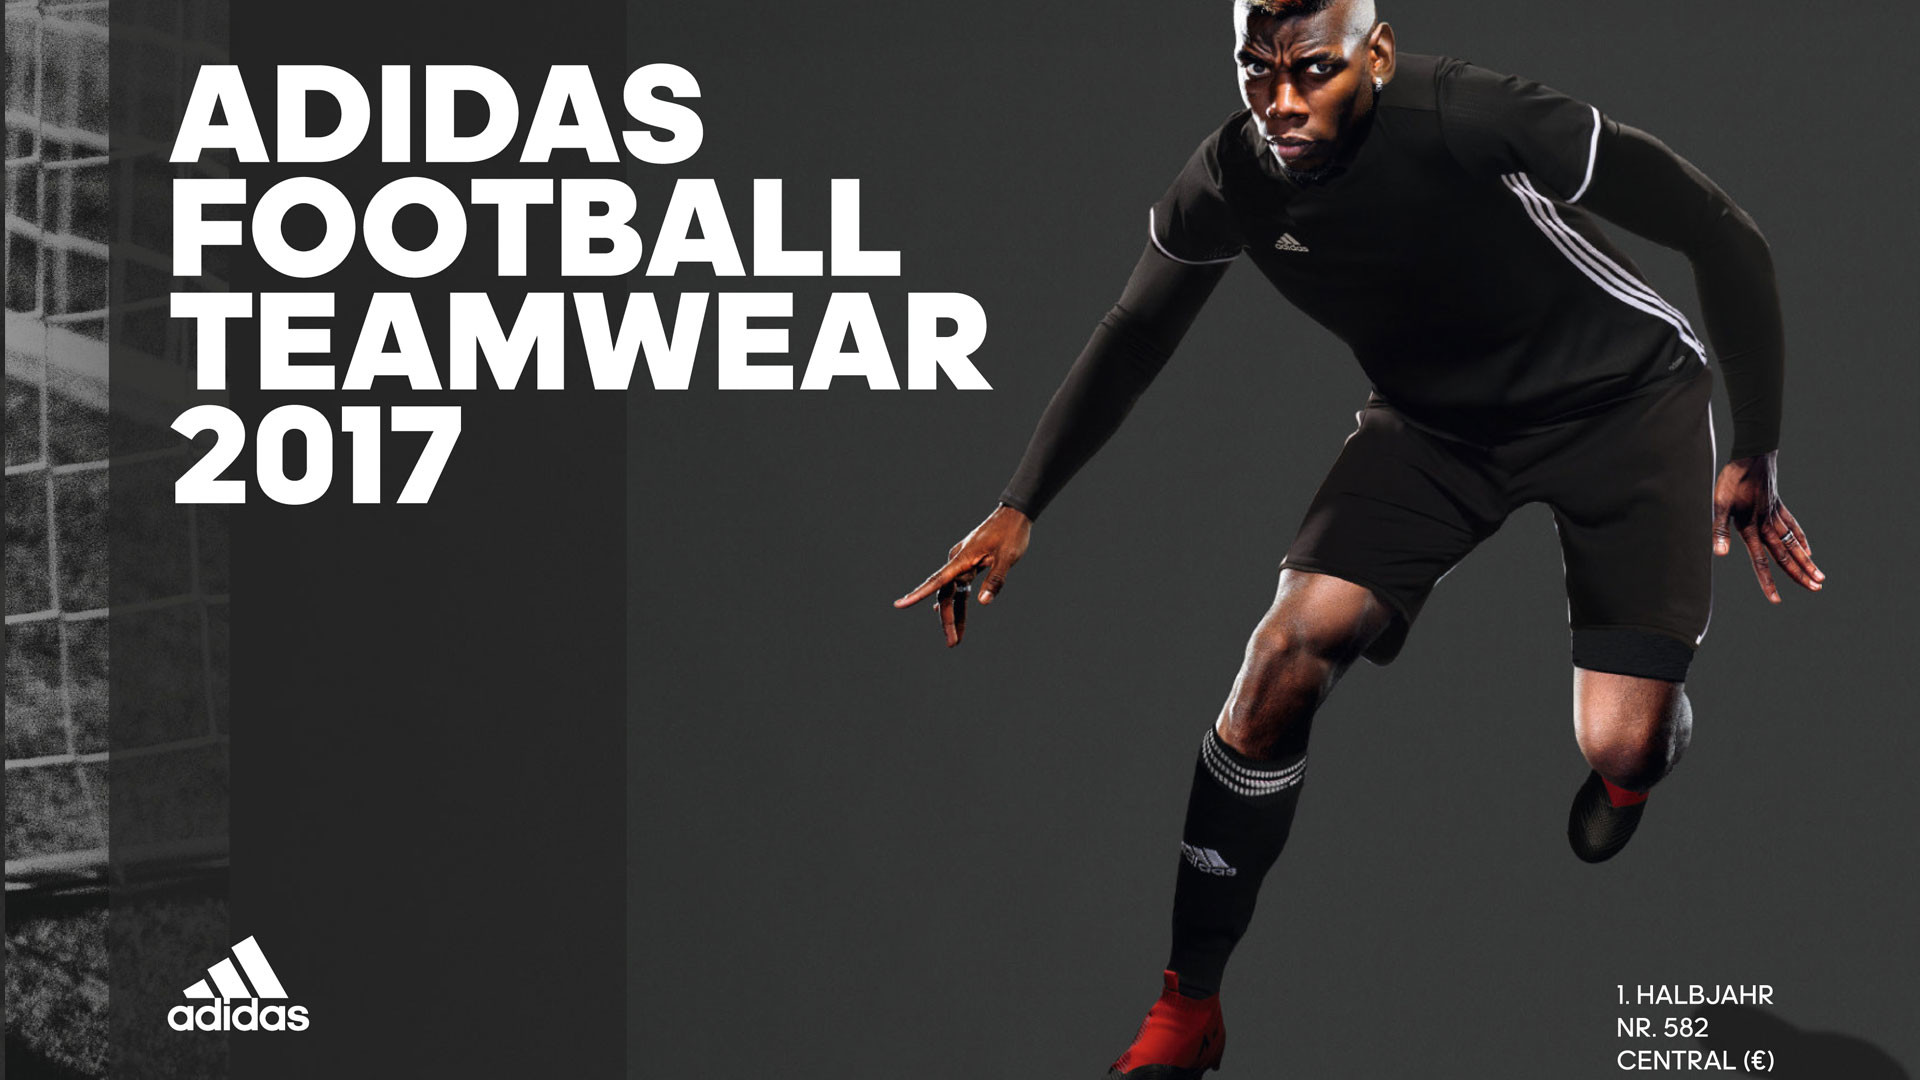 1920x1080 Der Adidas Football Teamwear Katalog 2017/2018 als FuÃball Teamsport PDF  Katalog